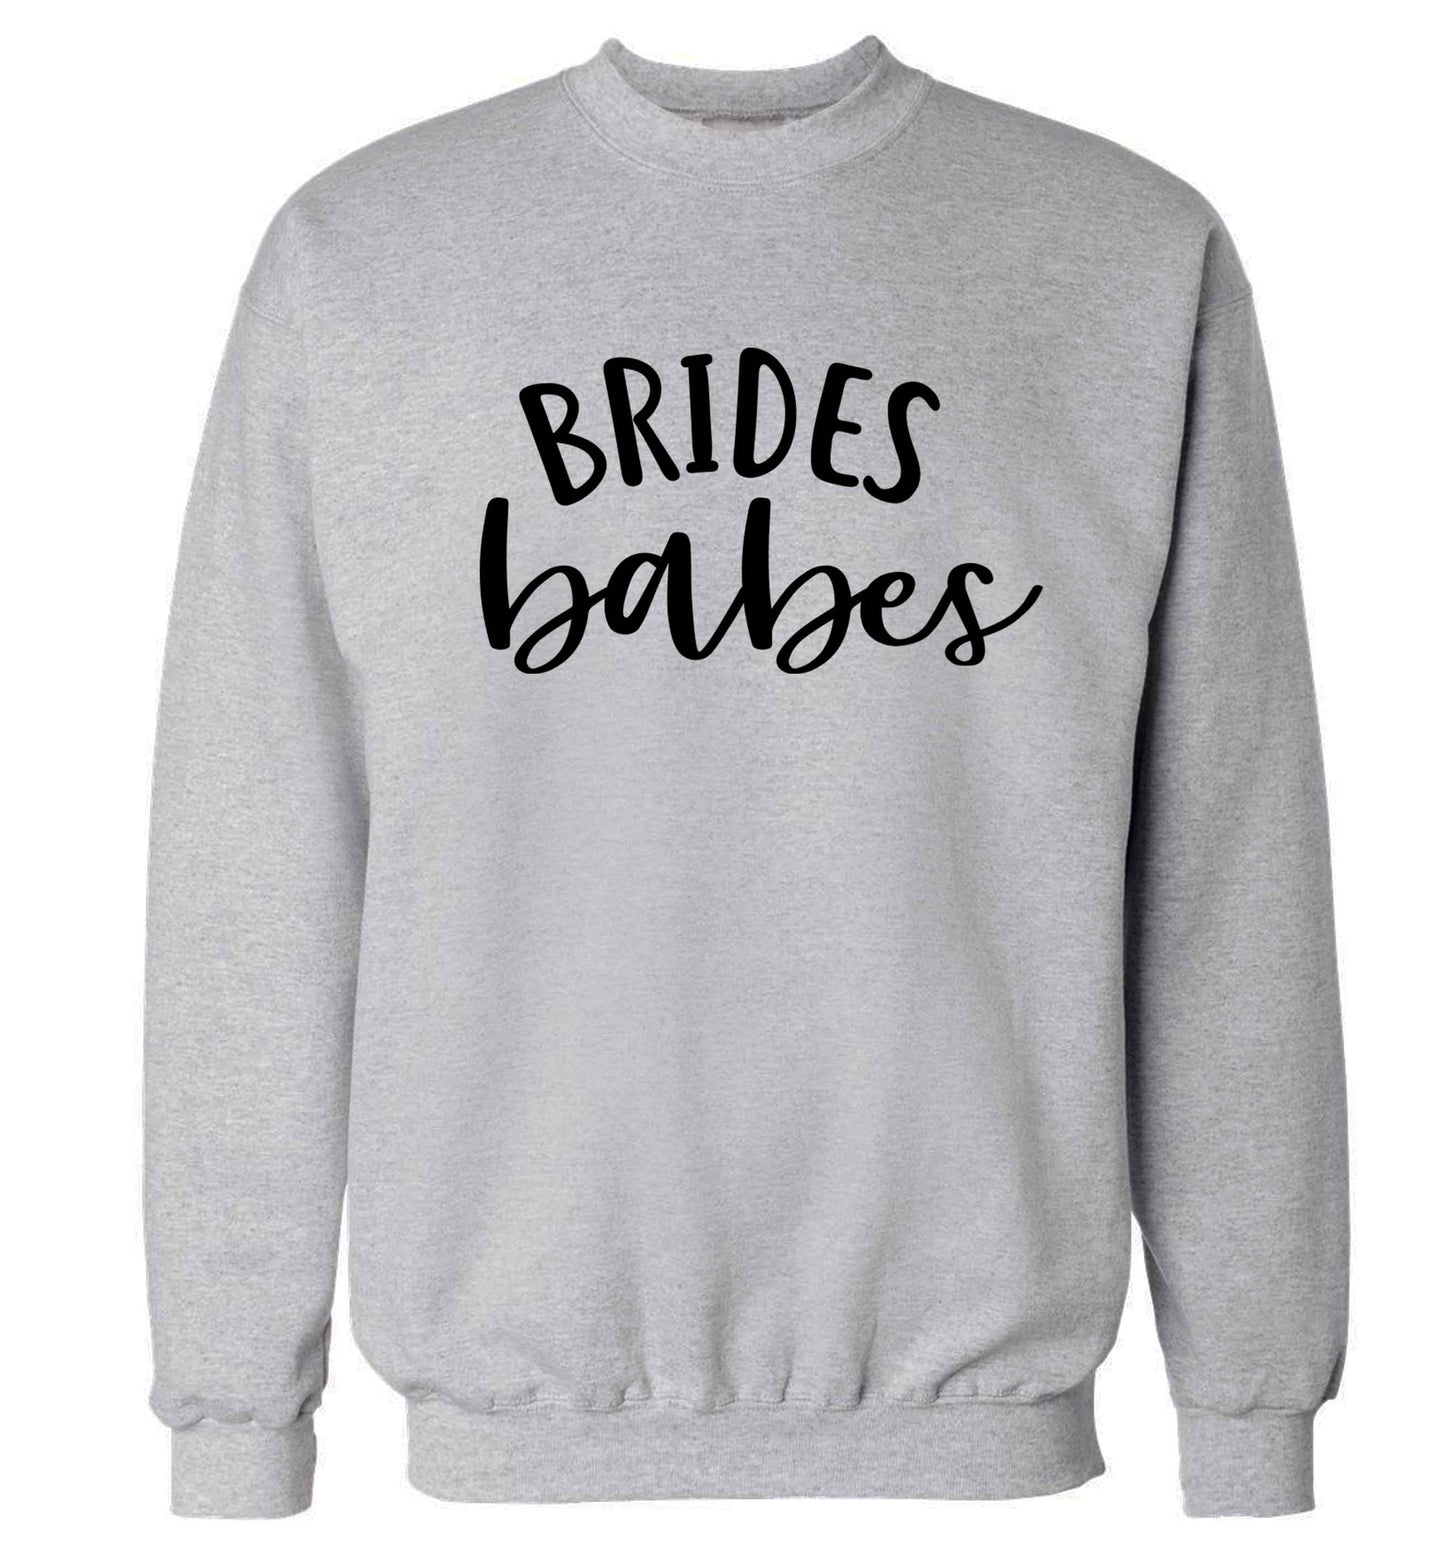 Brides Babes Adult's unisex grey Sweater 2XL